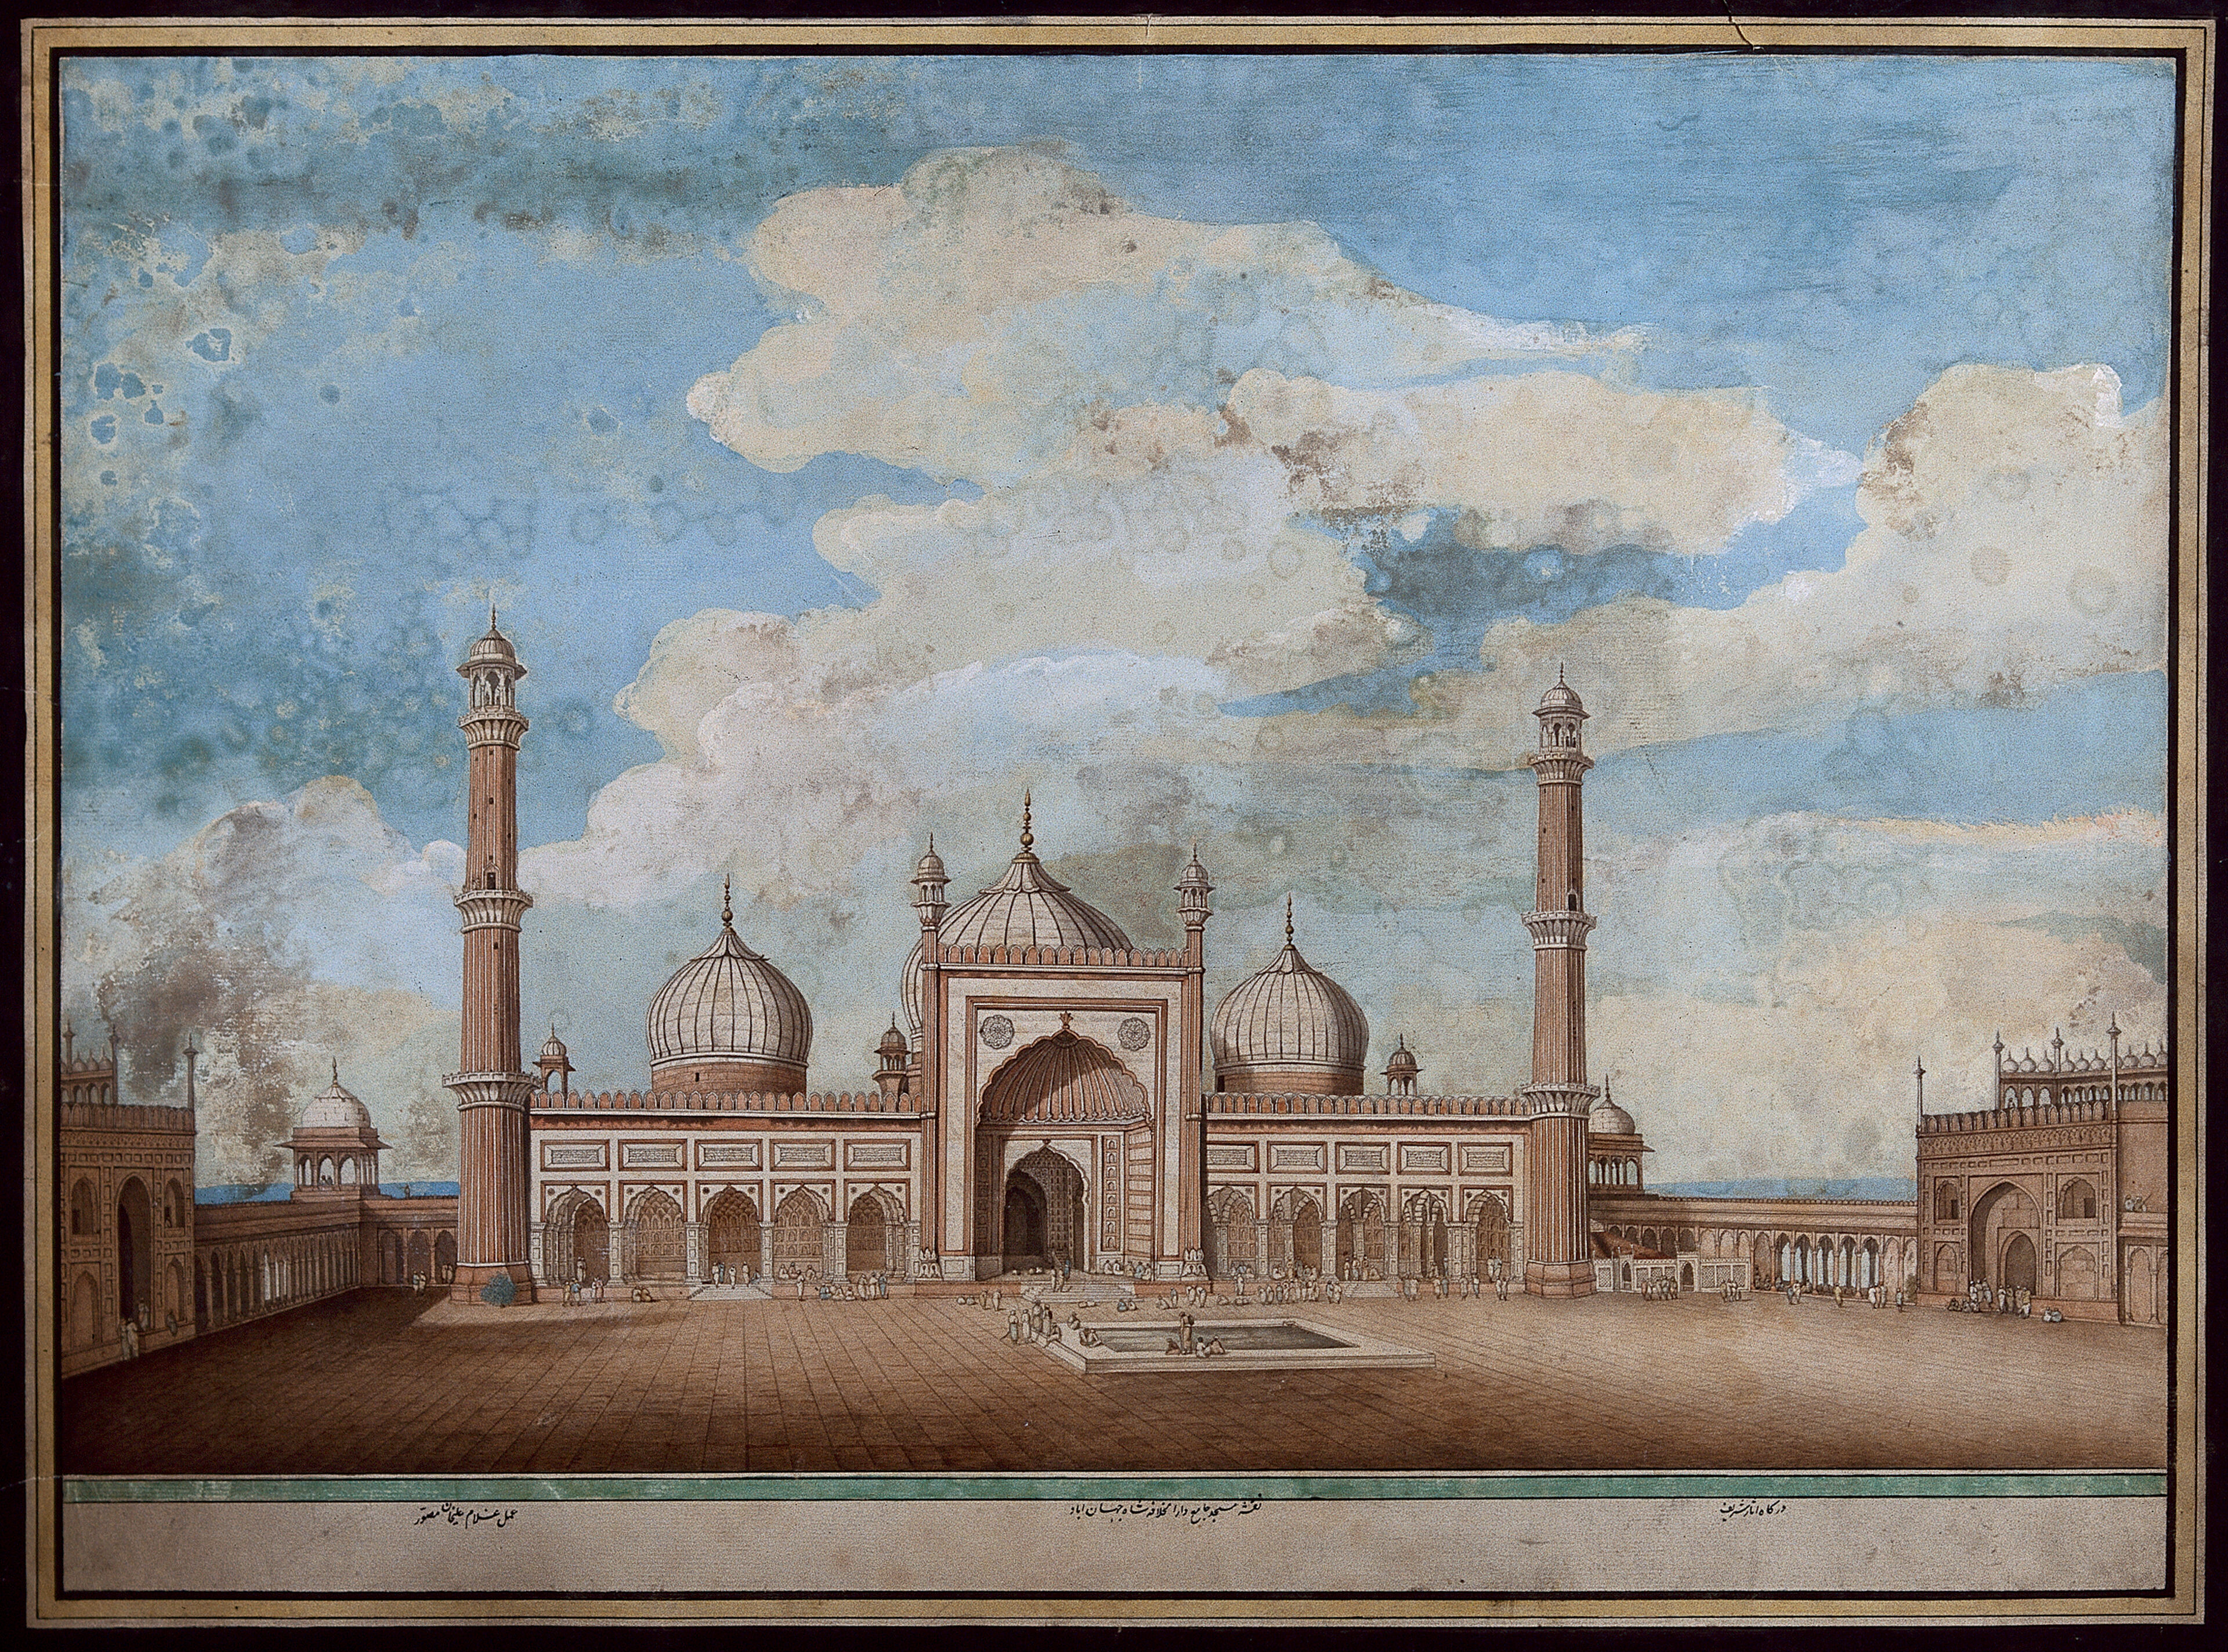 Delhi: Jama Masjid, exterior view of east facade. Watercolour by Ghulam Ali Khan, ca. 1820.